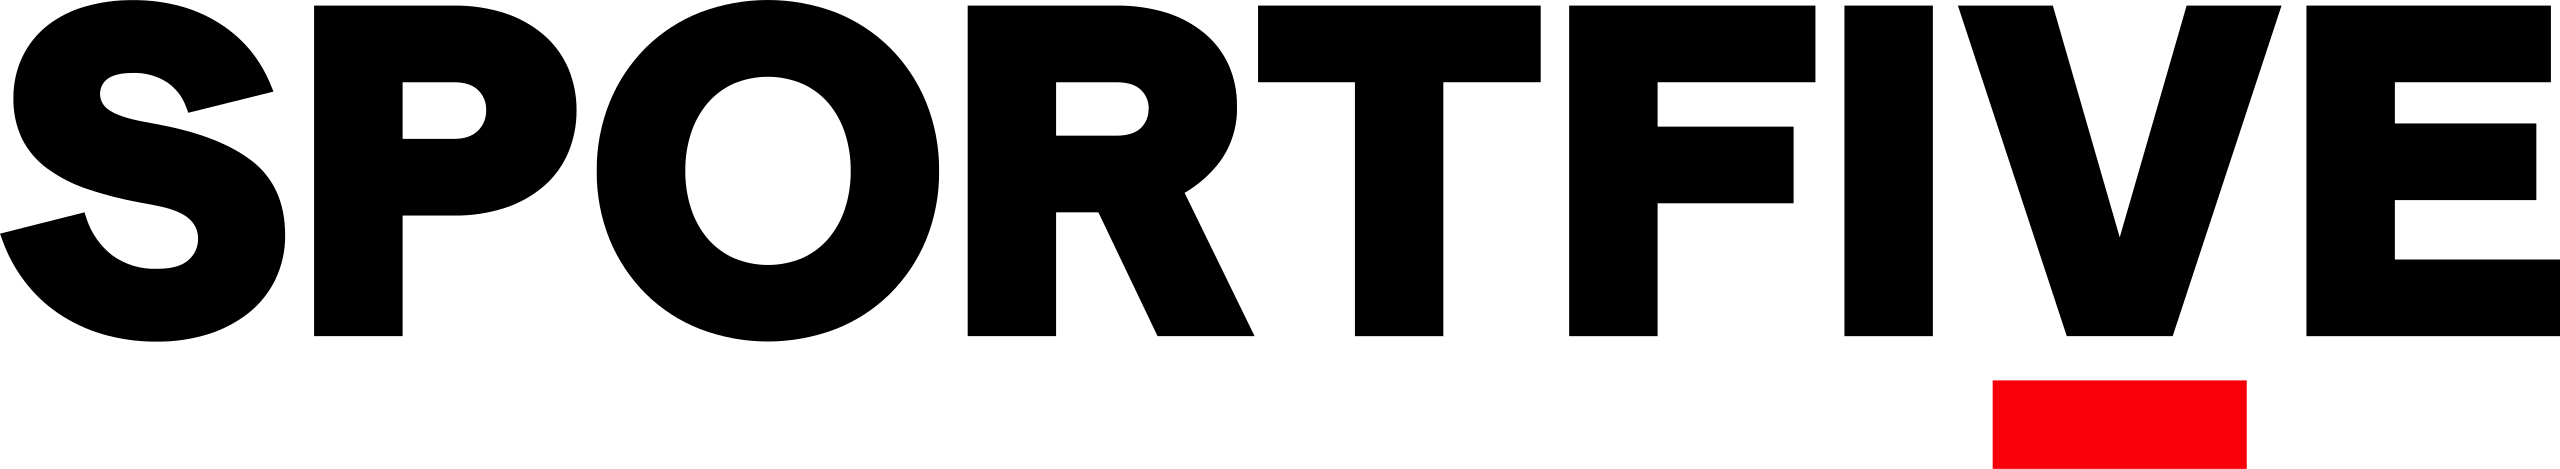 Sportfive_logo_(2021).svg